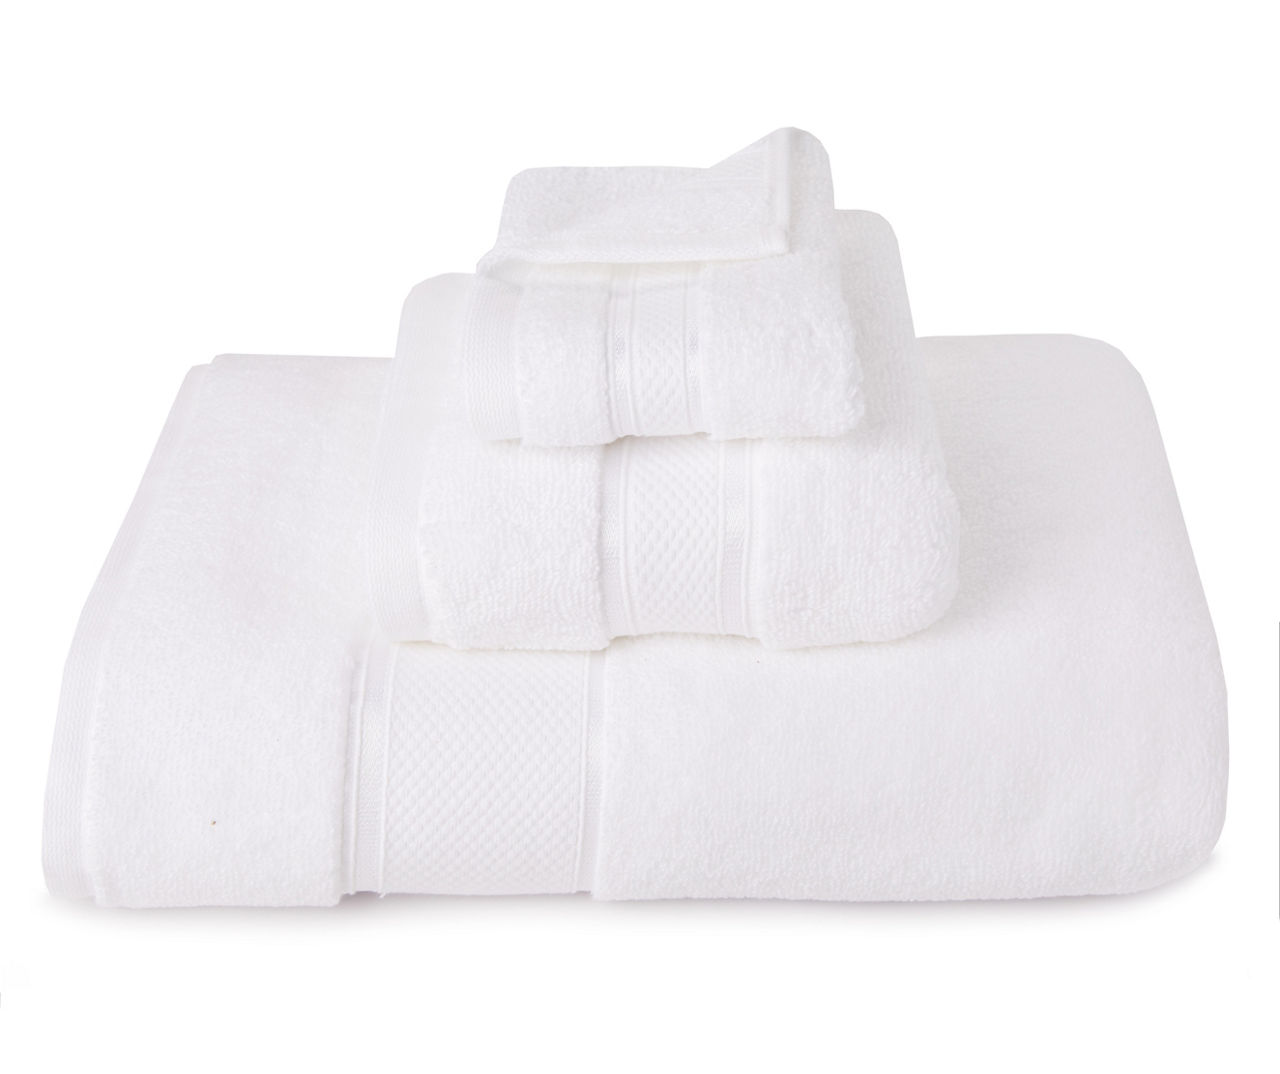 Broyhill White Performance Bath Towel